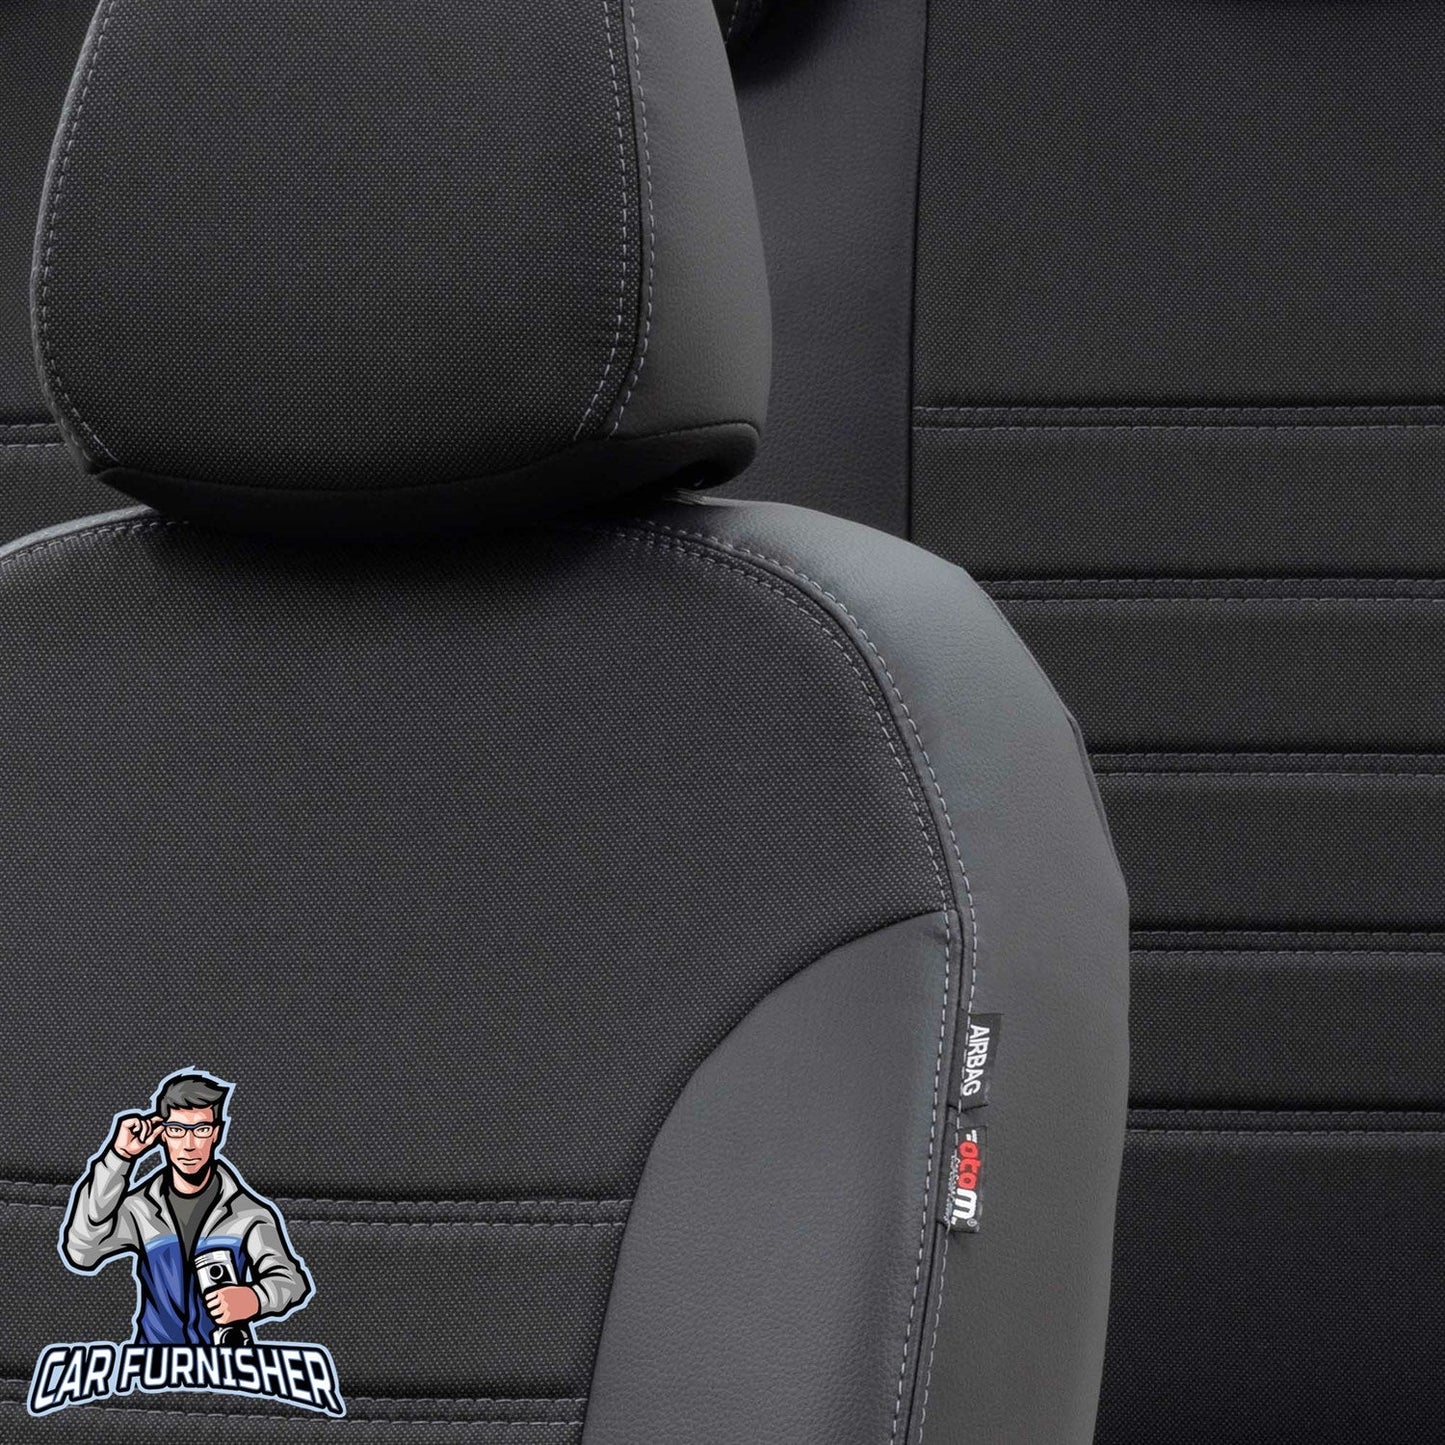 Toyota Auris Seat Cover Paris Leather & Jacquard Design Black Leather & Jacquard Fabric